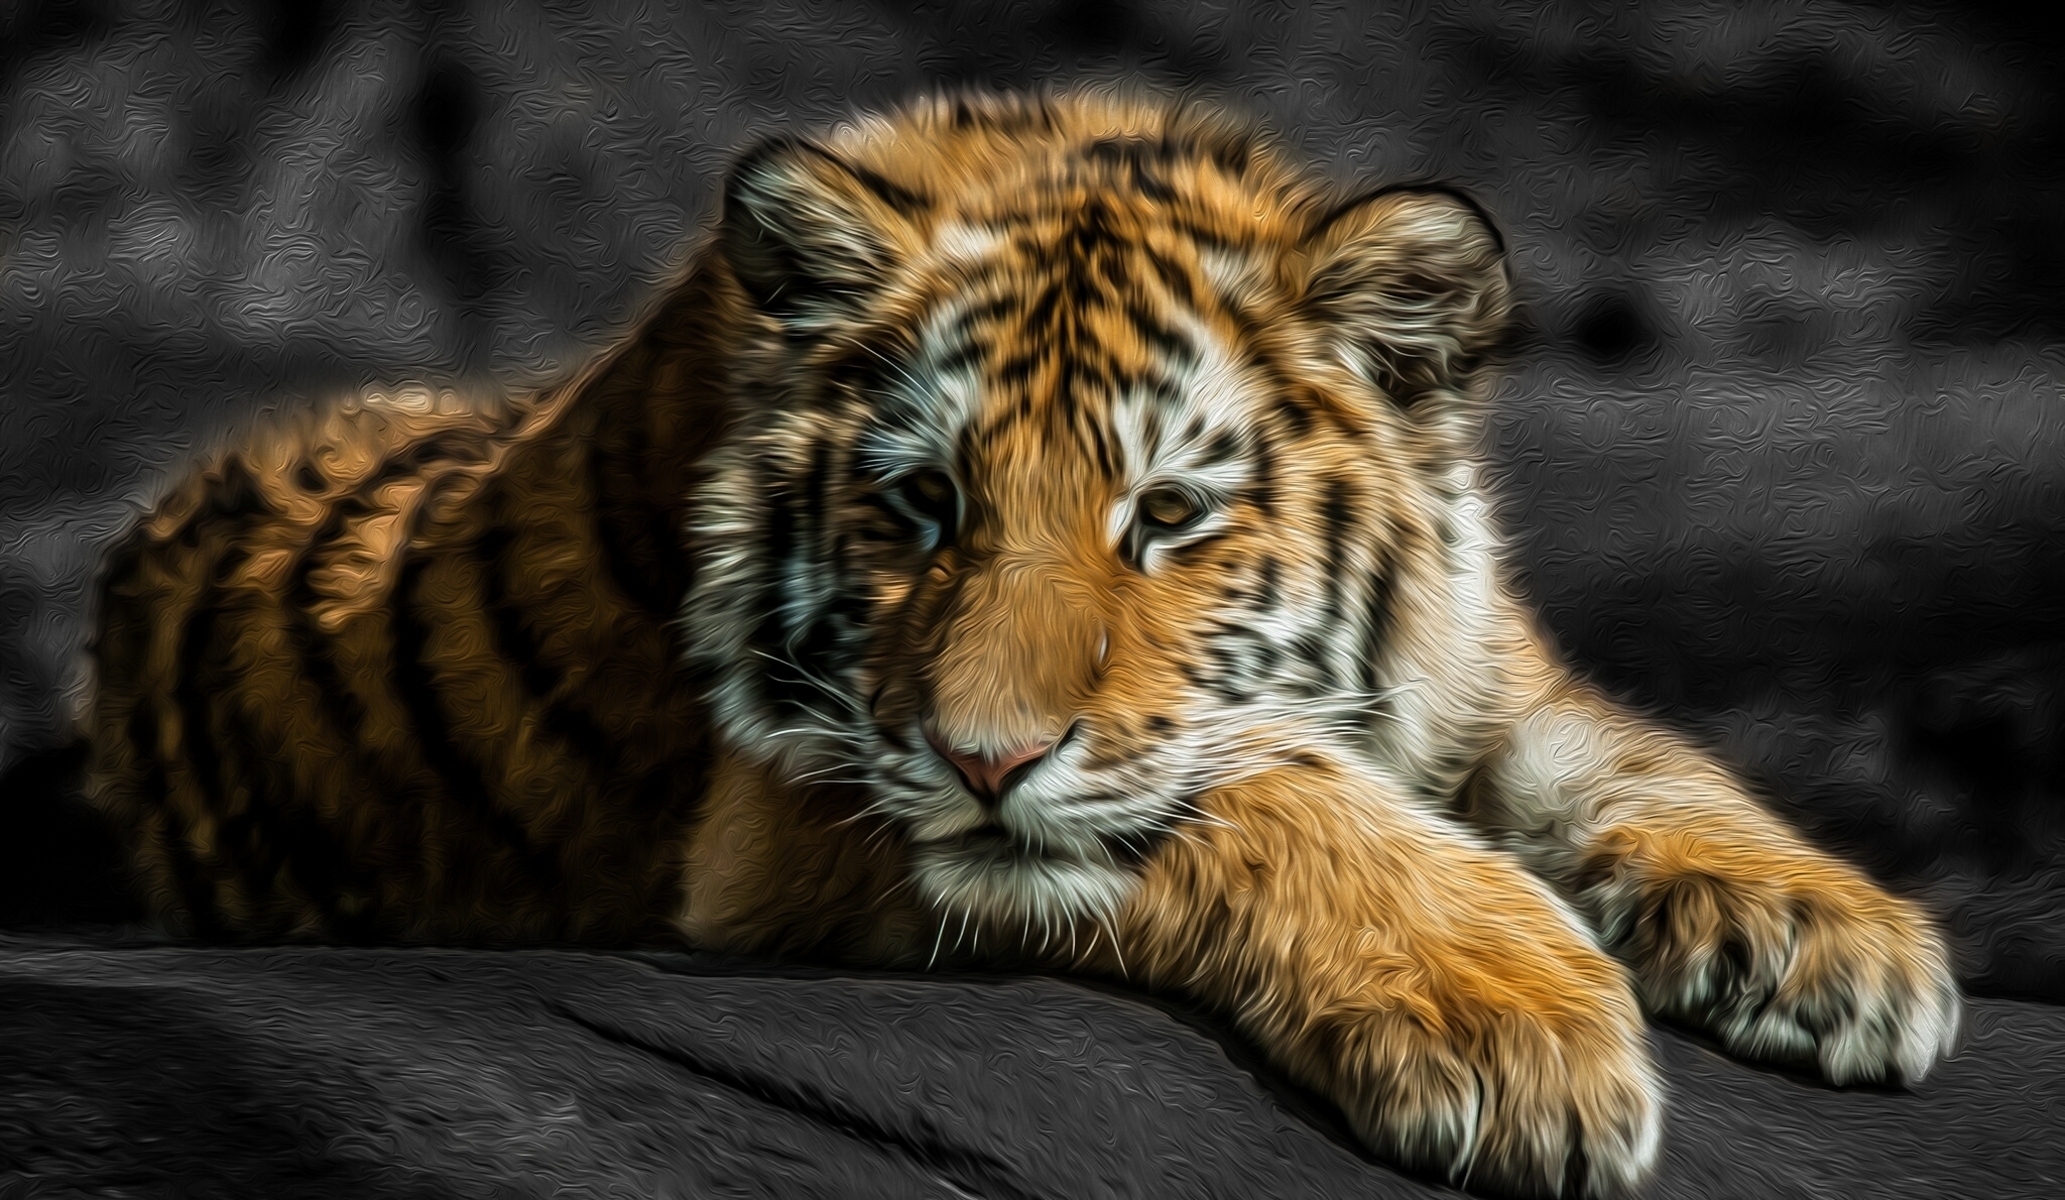 tiger cub, animals, young, kitty, kitten, to lie down, lie, predator, tiger, joey